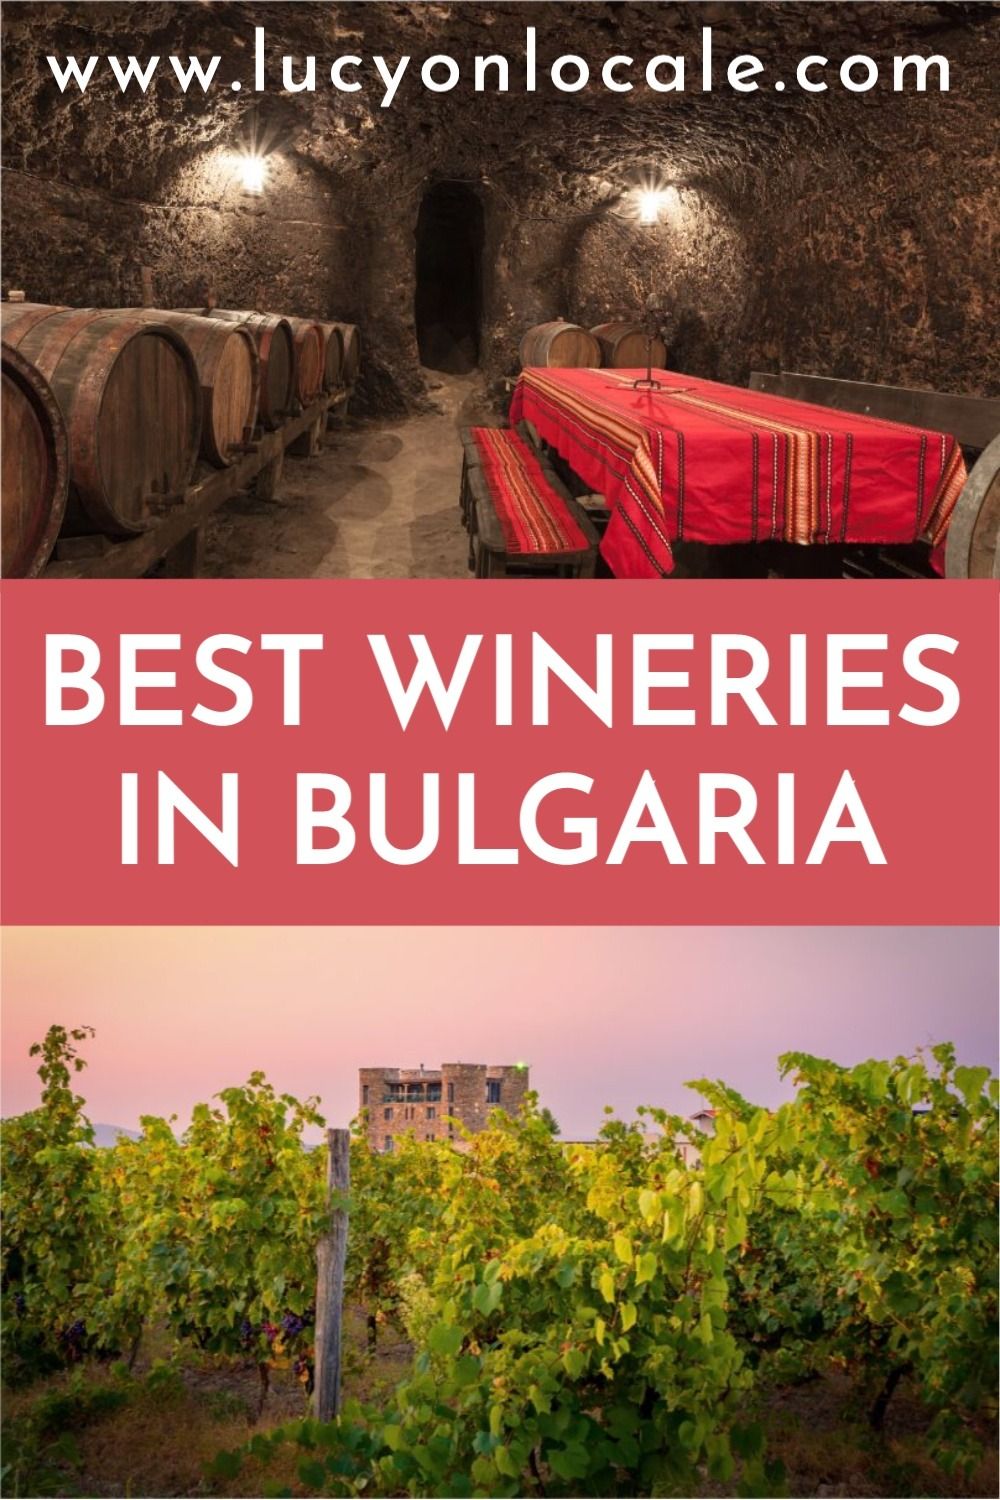 The Best Wineries in Bulgaria